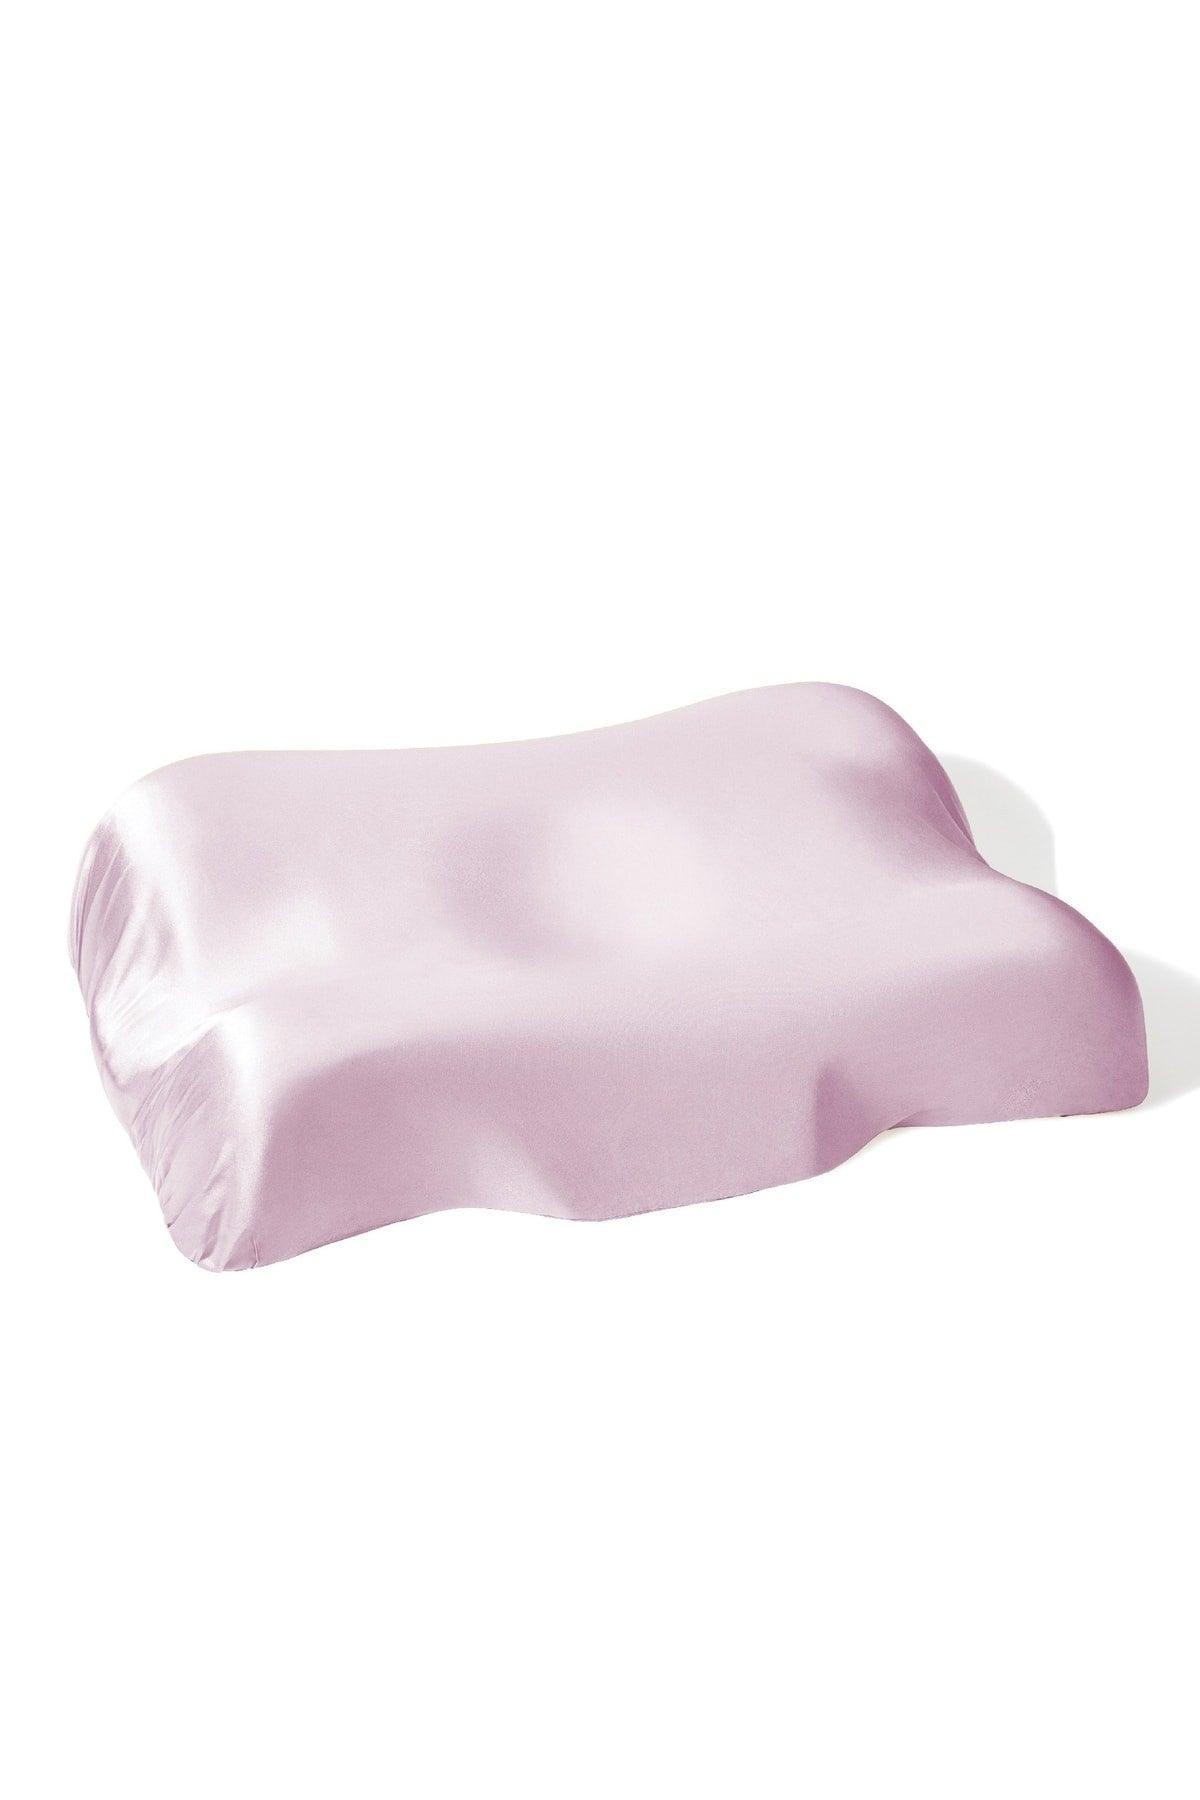 100% Silk Pillow Cover Lilac Color - Swordslife